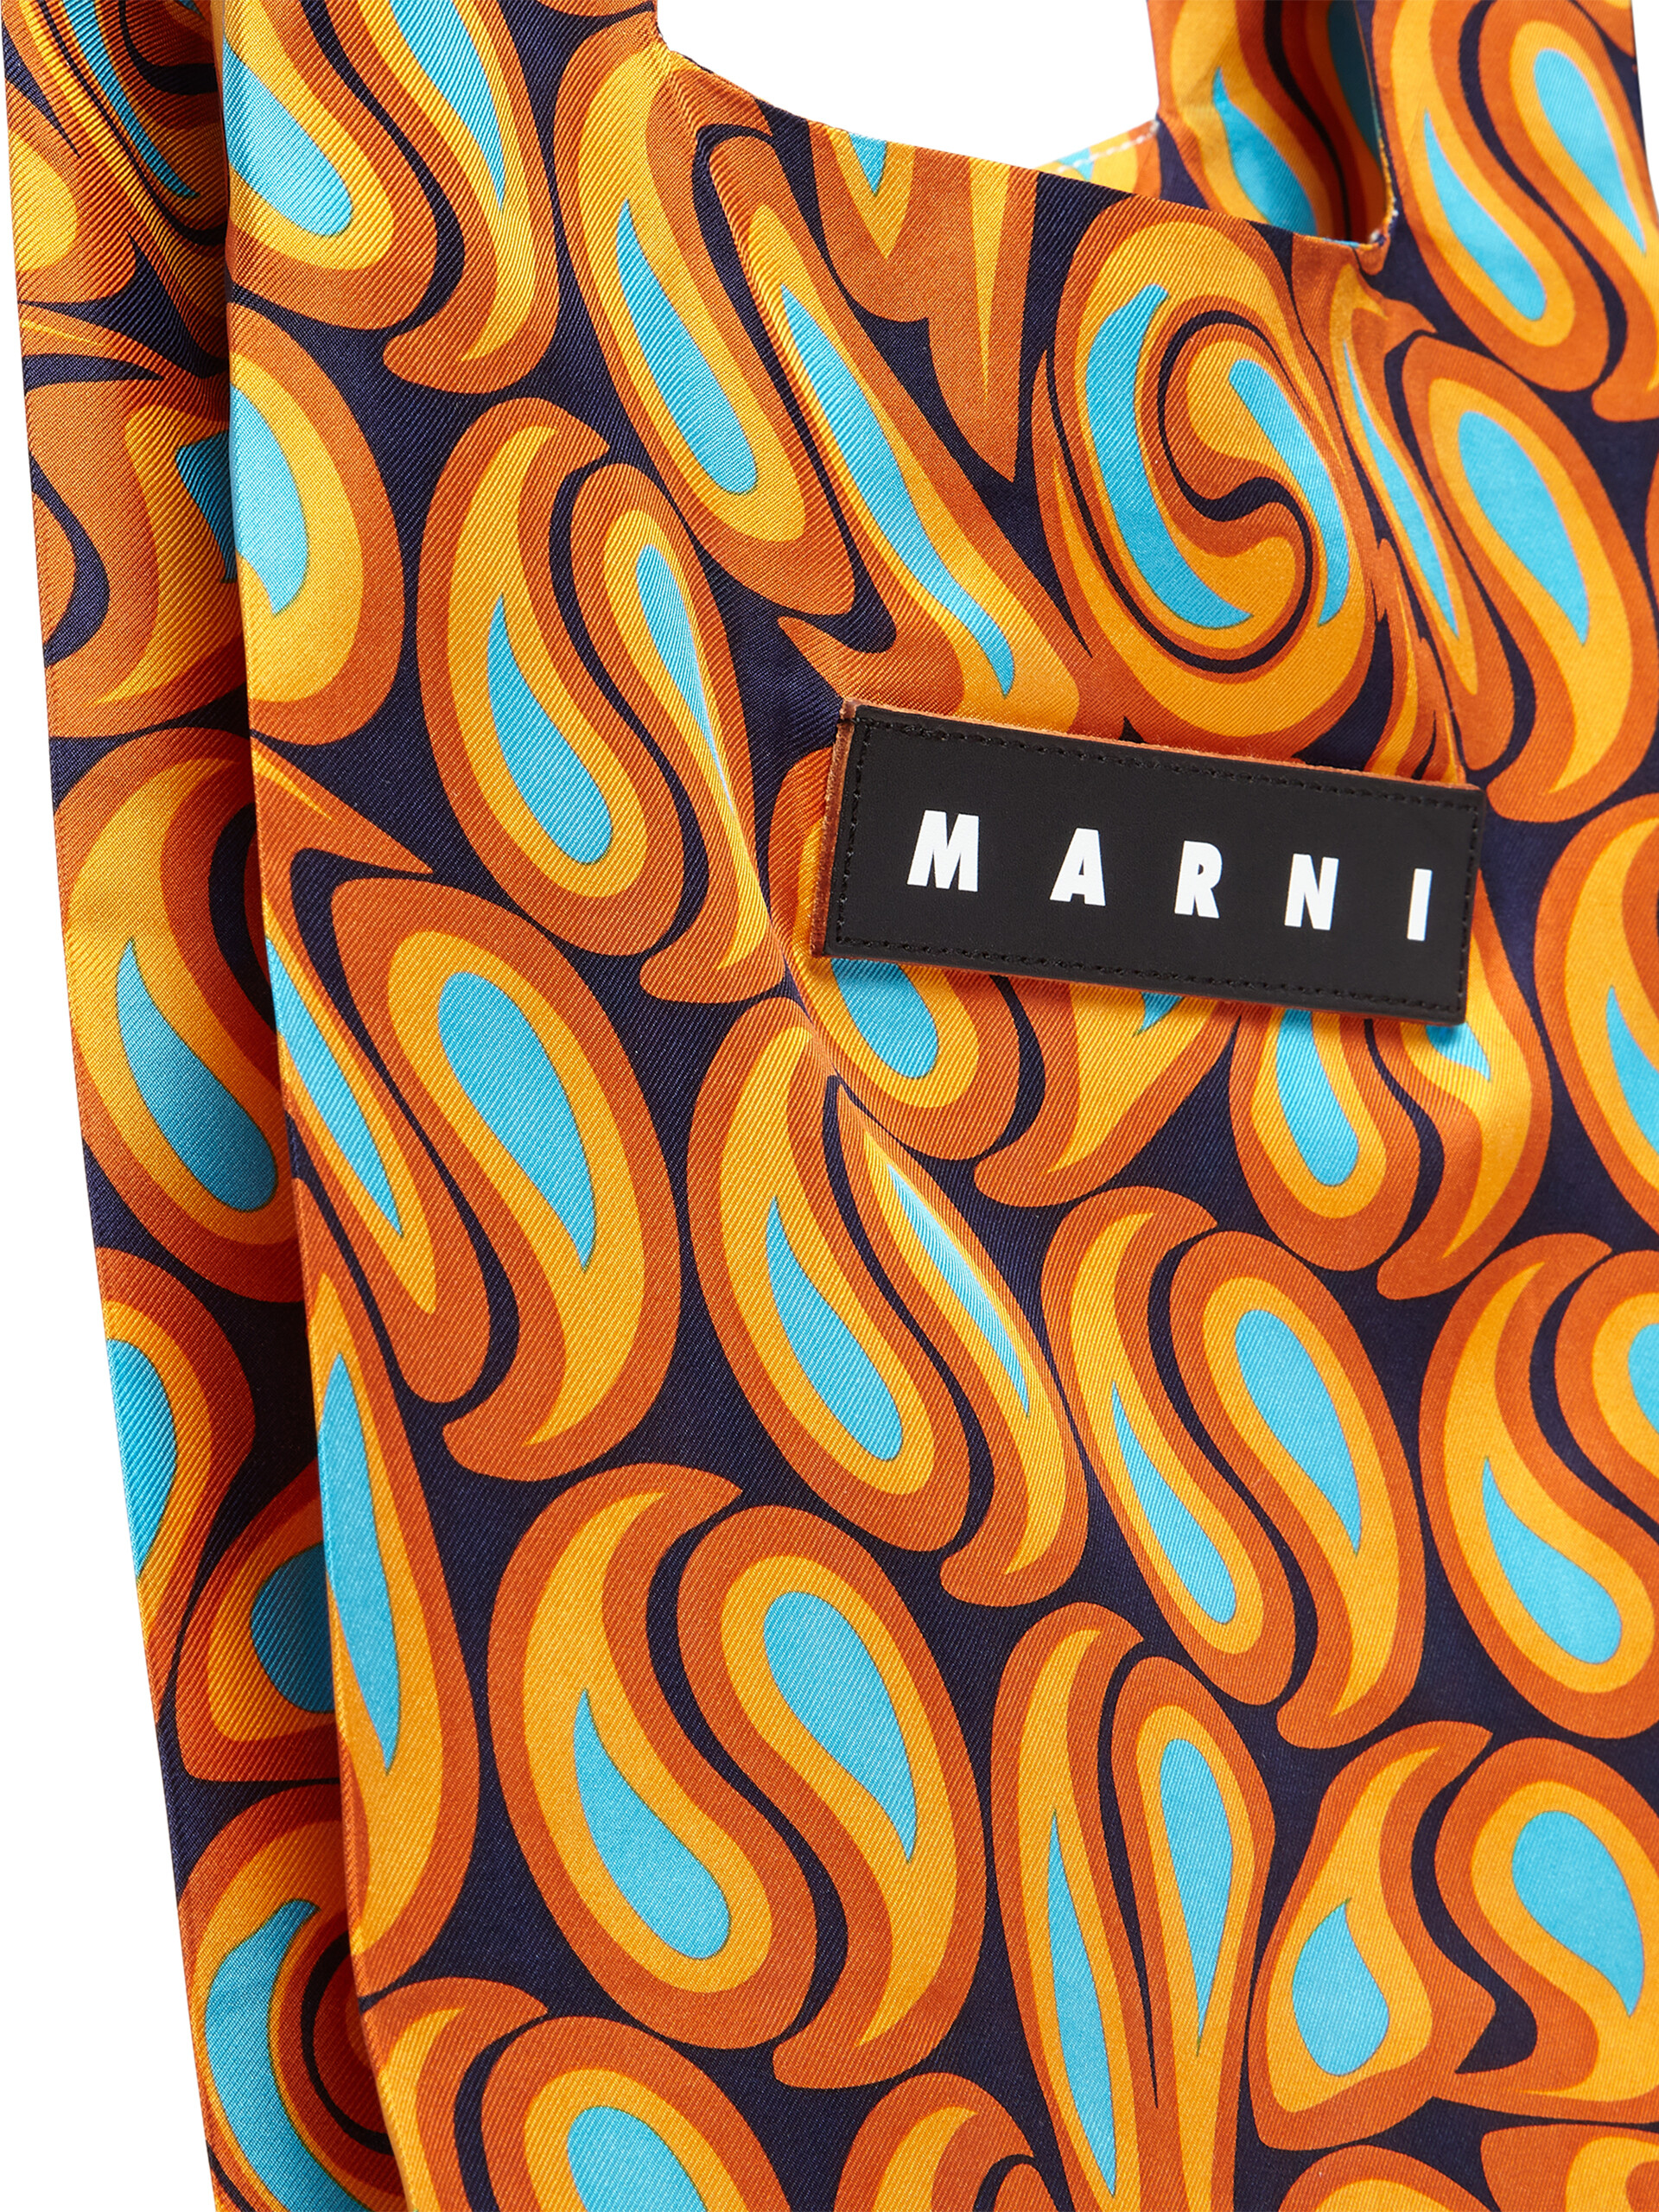 MARNI MARKET silk shopping bag with abstract print - Bags - Image 4